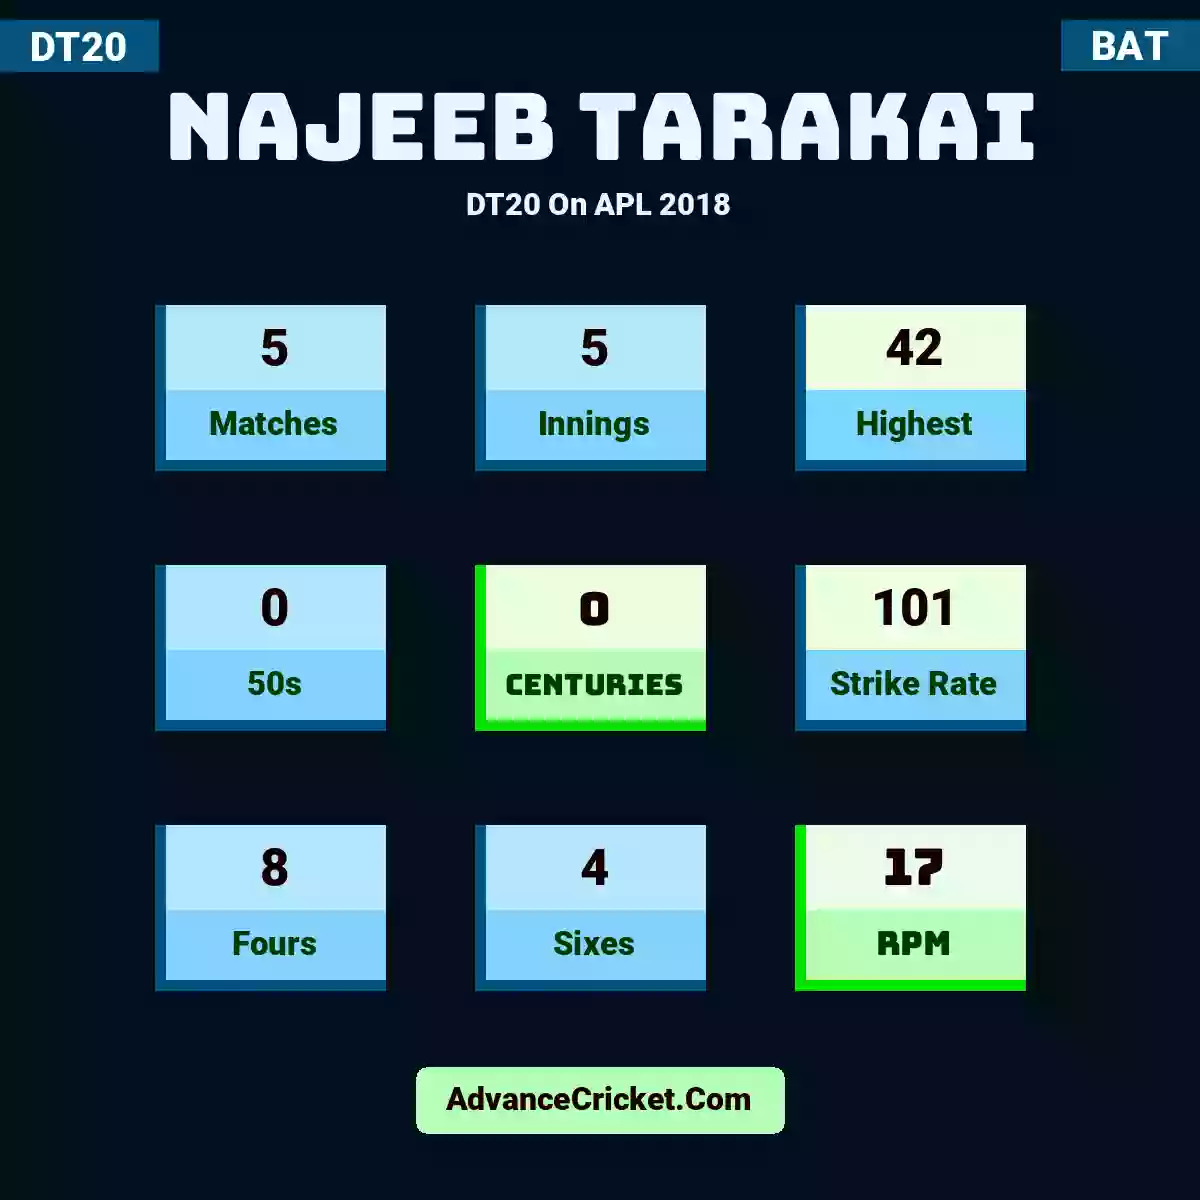 Najeeb Tarakai DT20  On APL 2018, Najeeb Tarakai played 5 matches, scored 42 runs as highest, 0 half-centuries, and 0 centuries, with a strike rate of 101. N.Tarakai hit 8 fours and 4 sixes, with an RPM of 17.